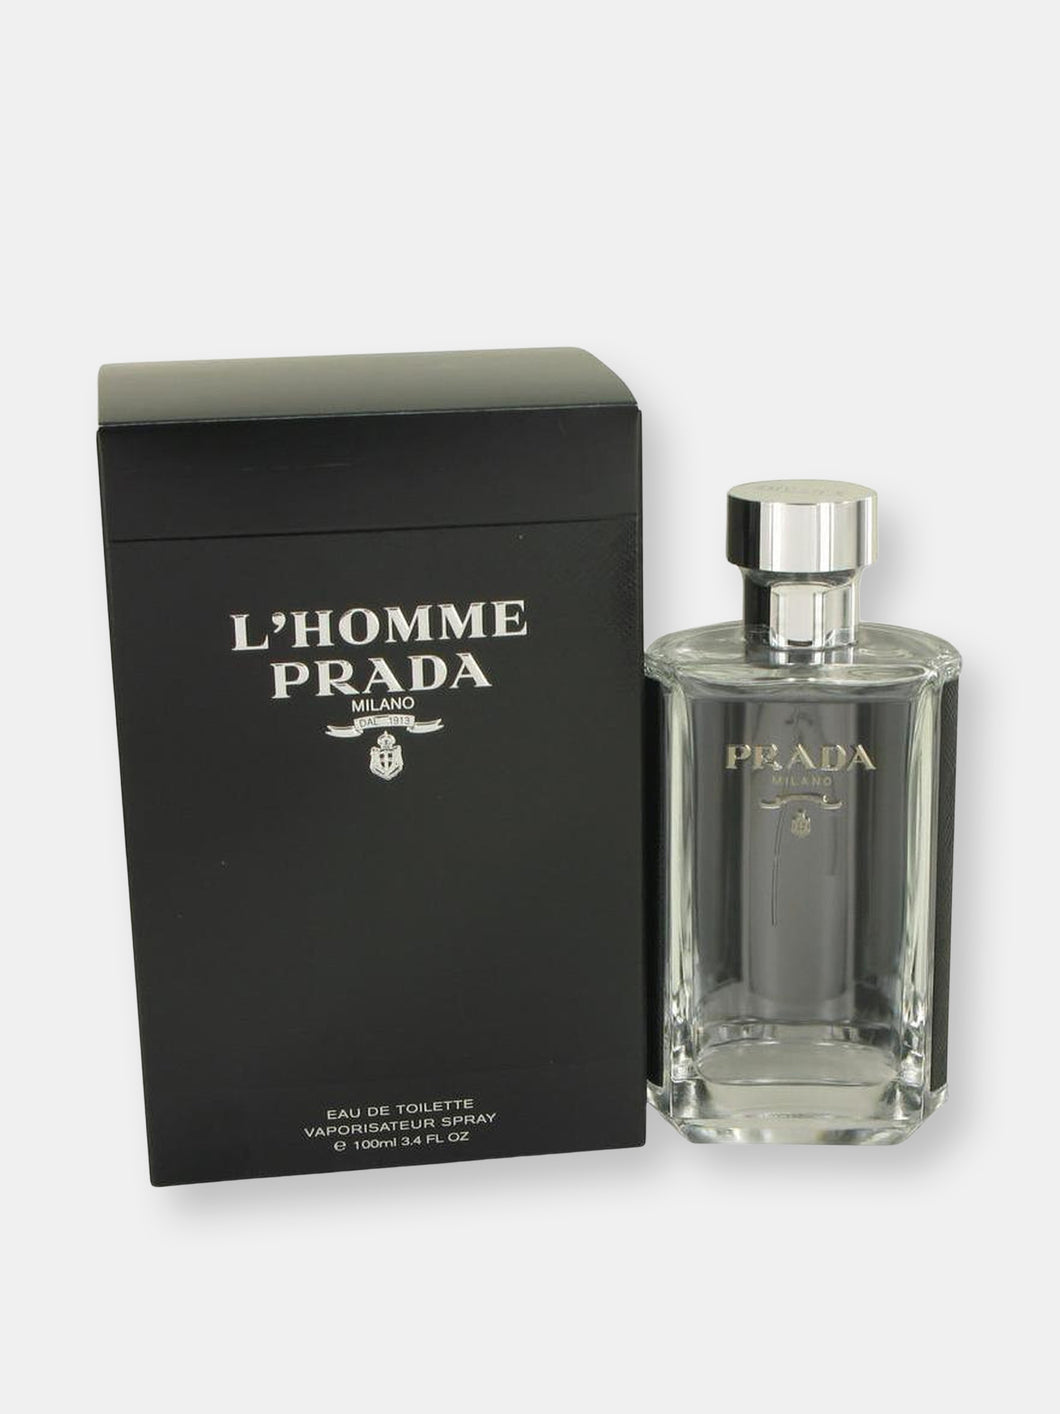 Prada L'homme by Prada Eau De Toilette Spray 3.4 oz